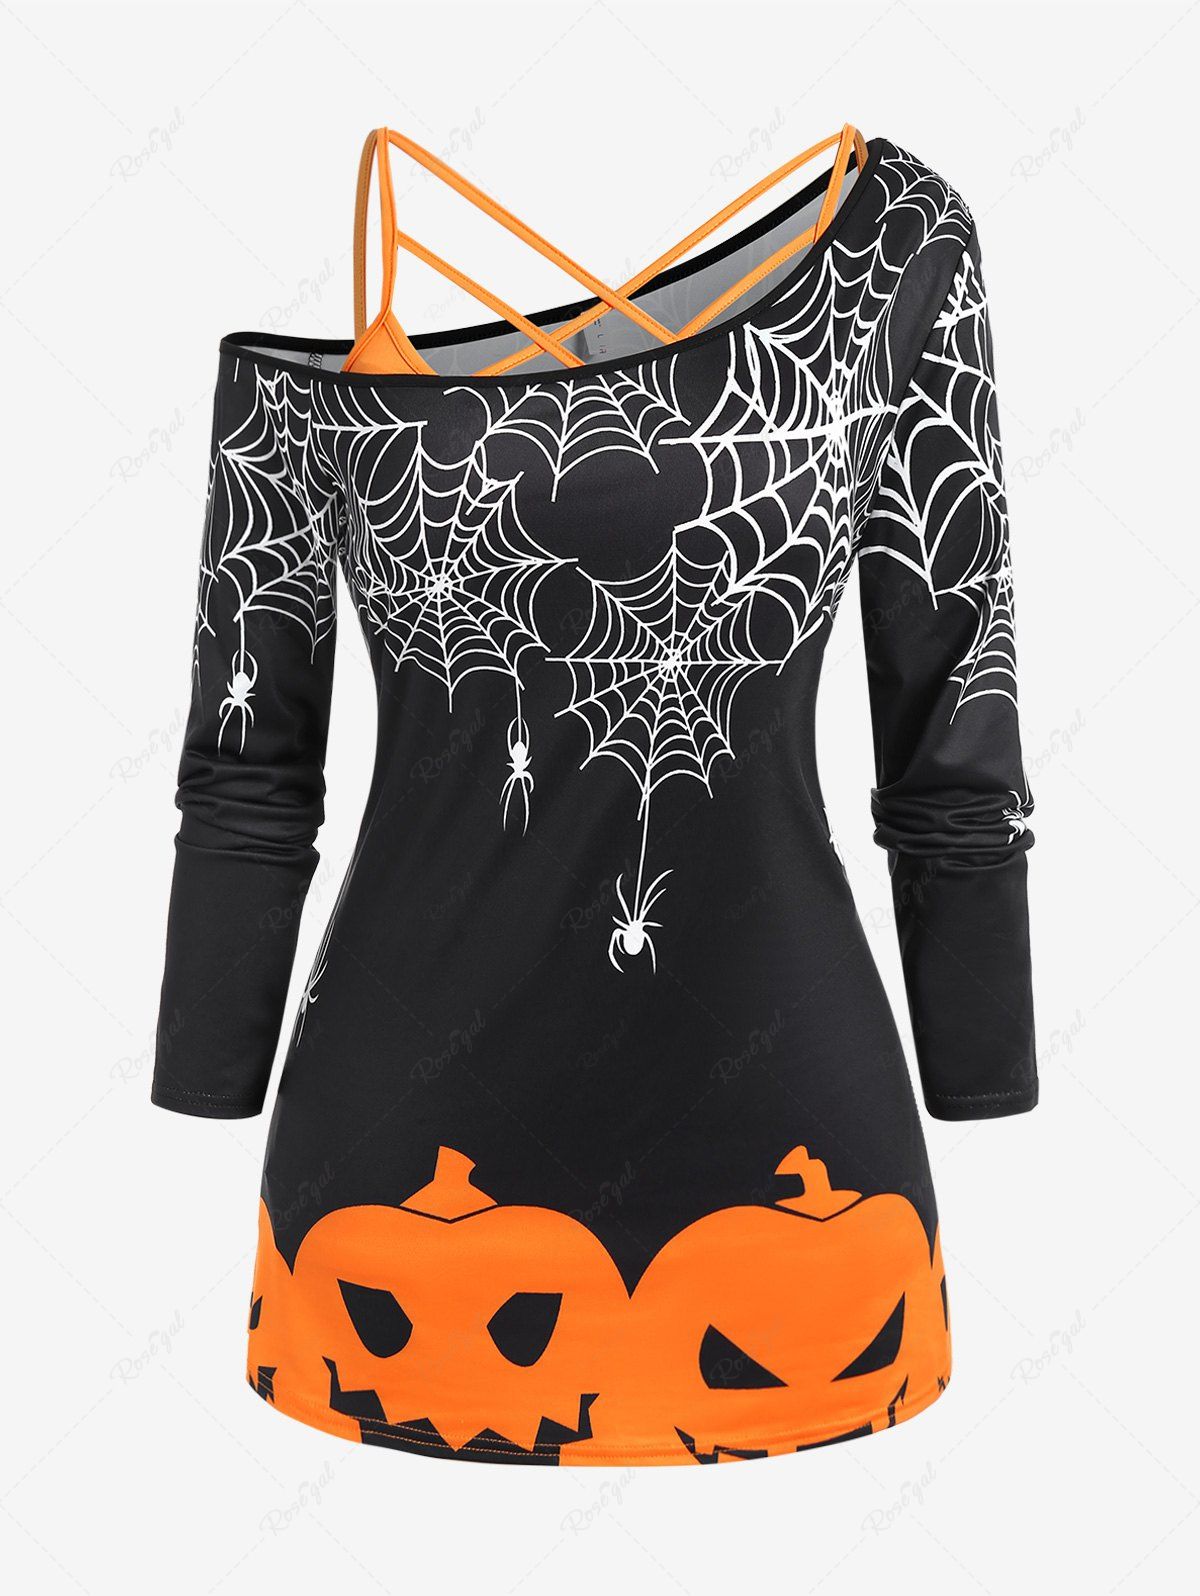 Hot Halloween Skew Neck Pumpkins Spider Web Printed Tee and Crisscross Tank Top Set  